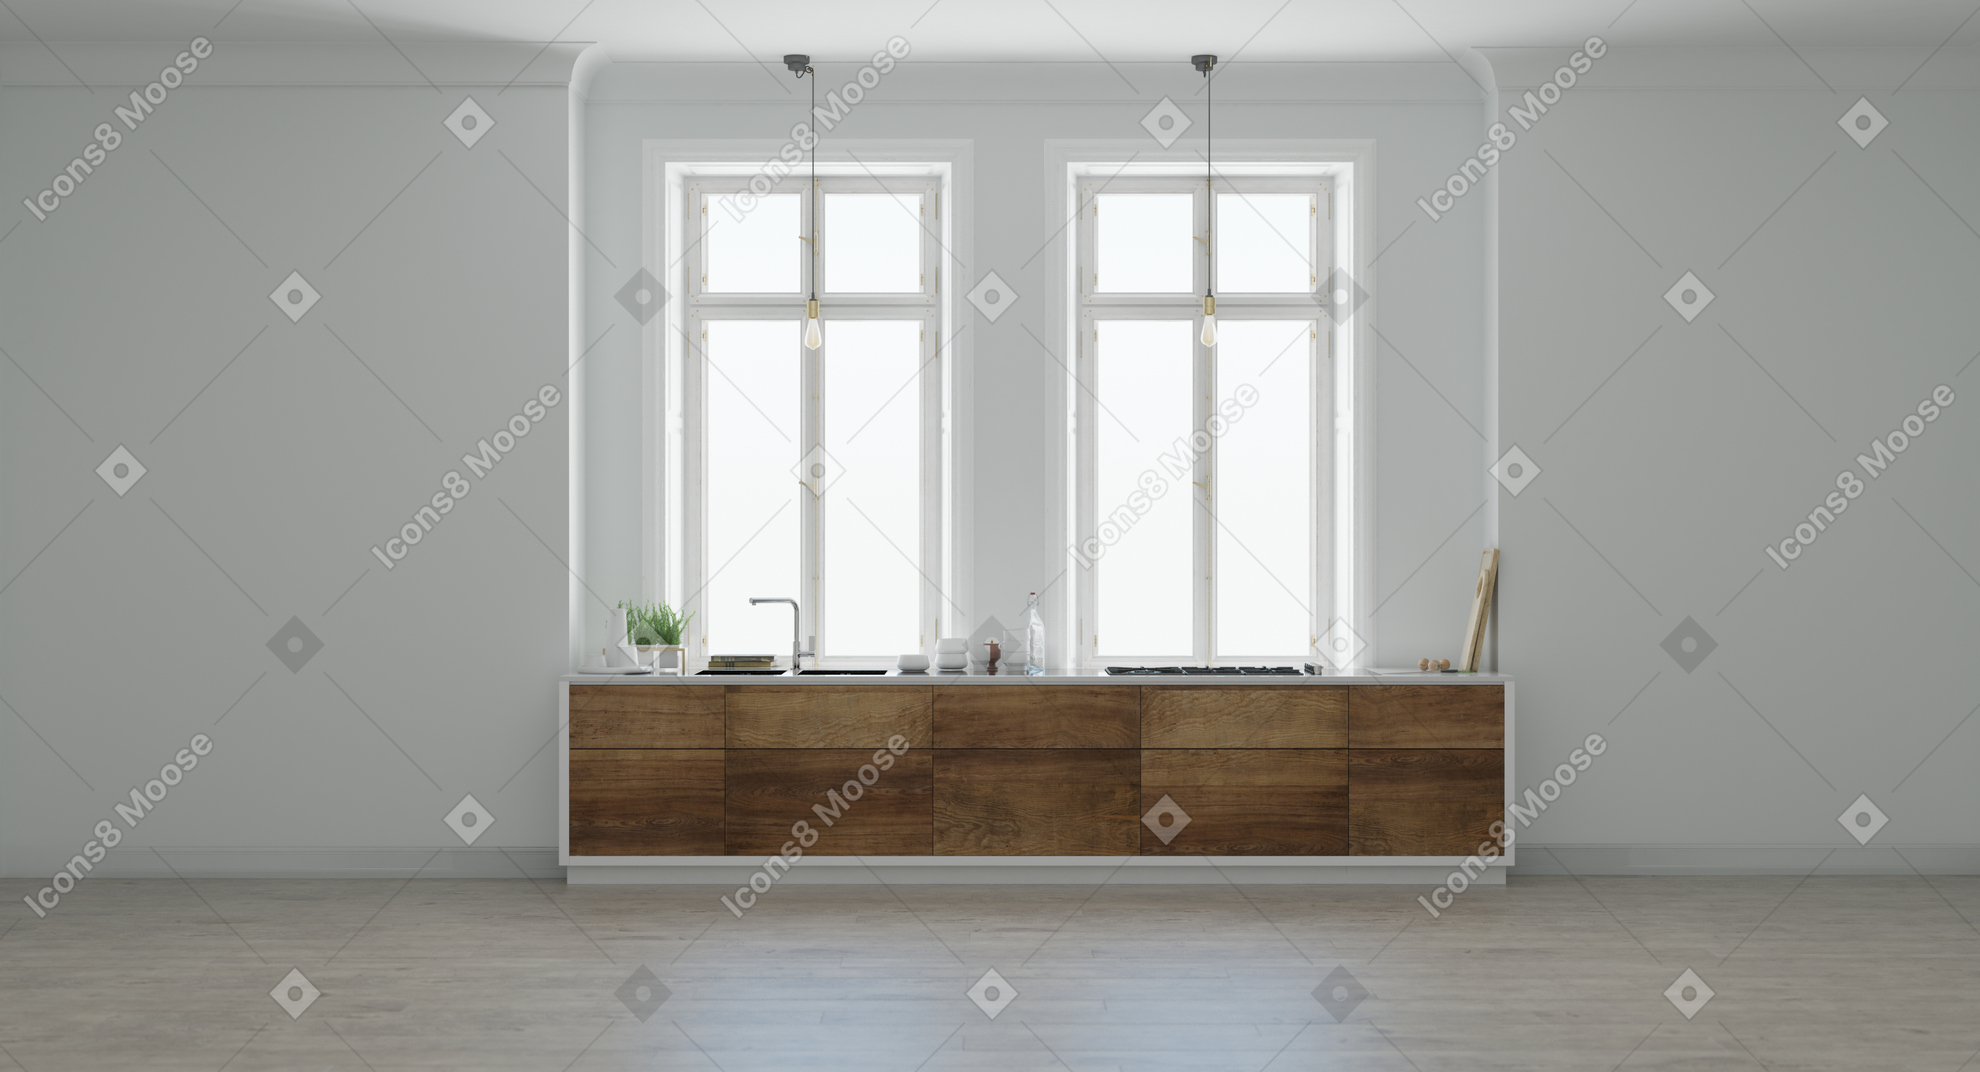 Kitchen with wooden kitchen cabinets